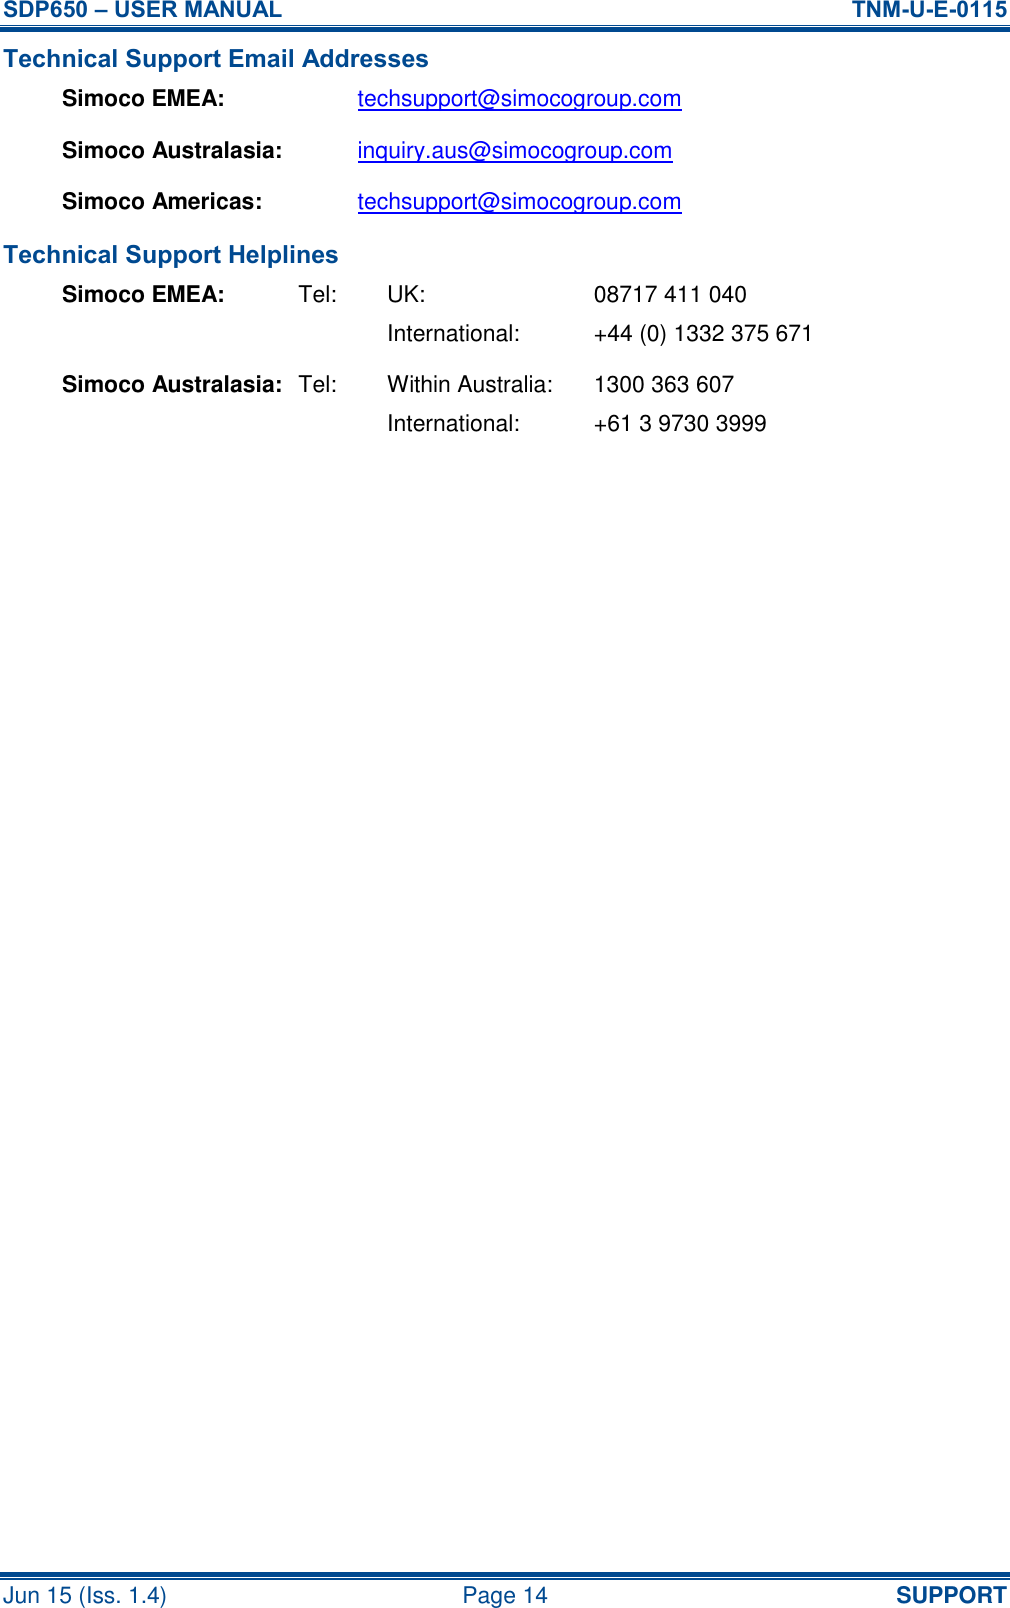 SDP650 – USER MANUAL  TNM-U-E-0115 Jun 15 (Iss. 1.4)  Page 14 SUPPORT Technical Support Email Addresses Simoco EMEA: techsupport@simocogroup.com Simoco Australasia: inquiry.aus@simocogroup.com Simoco Americas: techsupport@simocogroup.com Technical Support Helplines Simoco EMEA:  Tel:  UK:  08717 411 040     International:  +44 (0) 1332 375 671 Simoco Australasia:  Tel:  Within Australia:  1300 363 607     International:  +61 3 9730 3999   